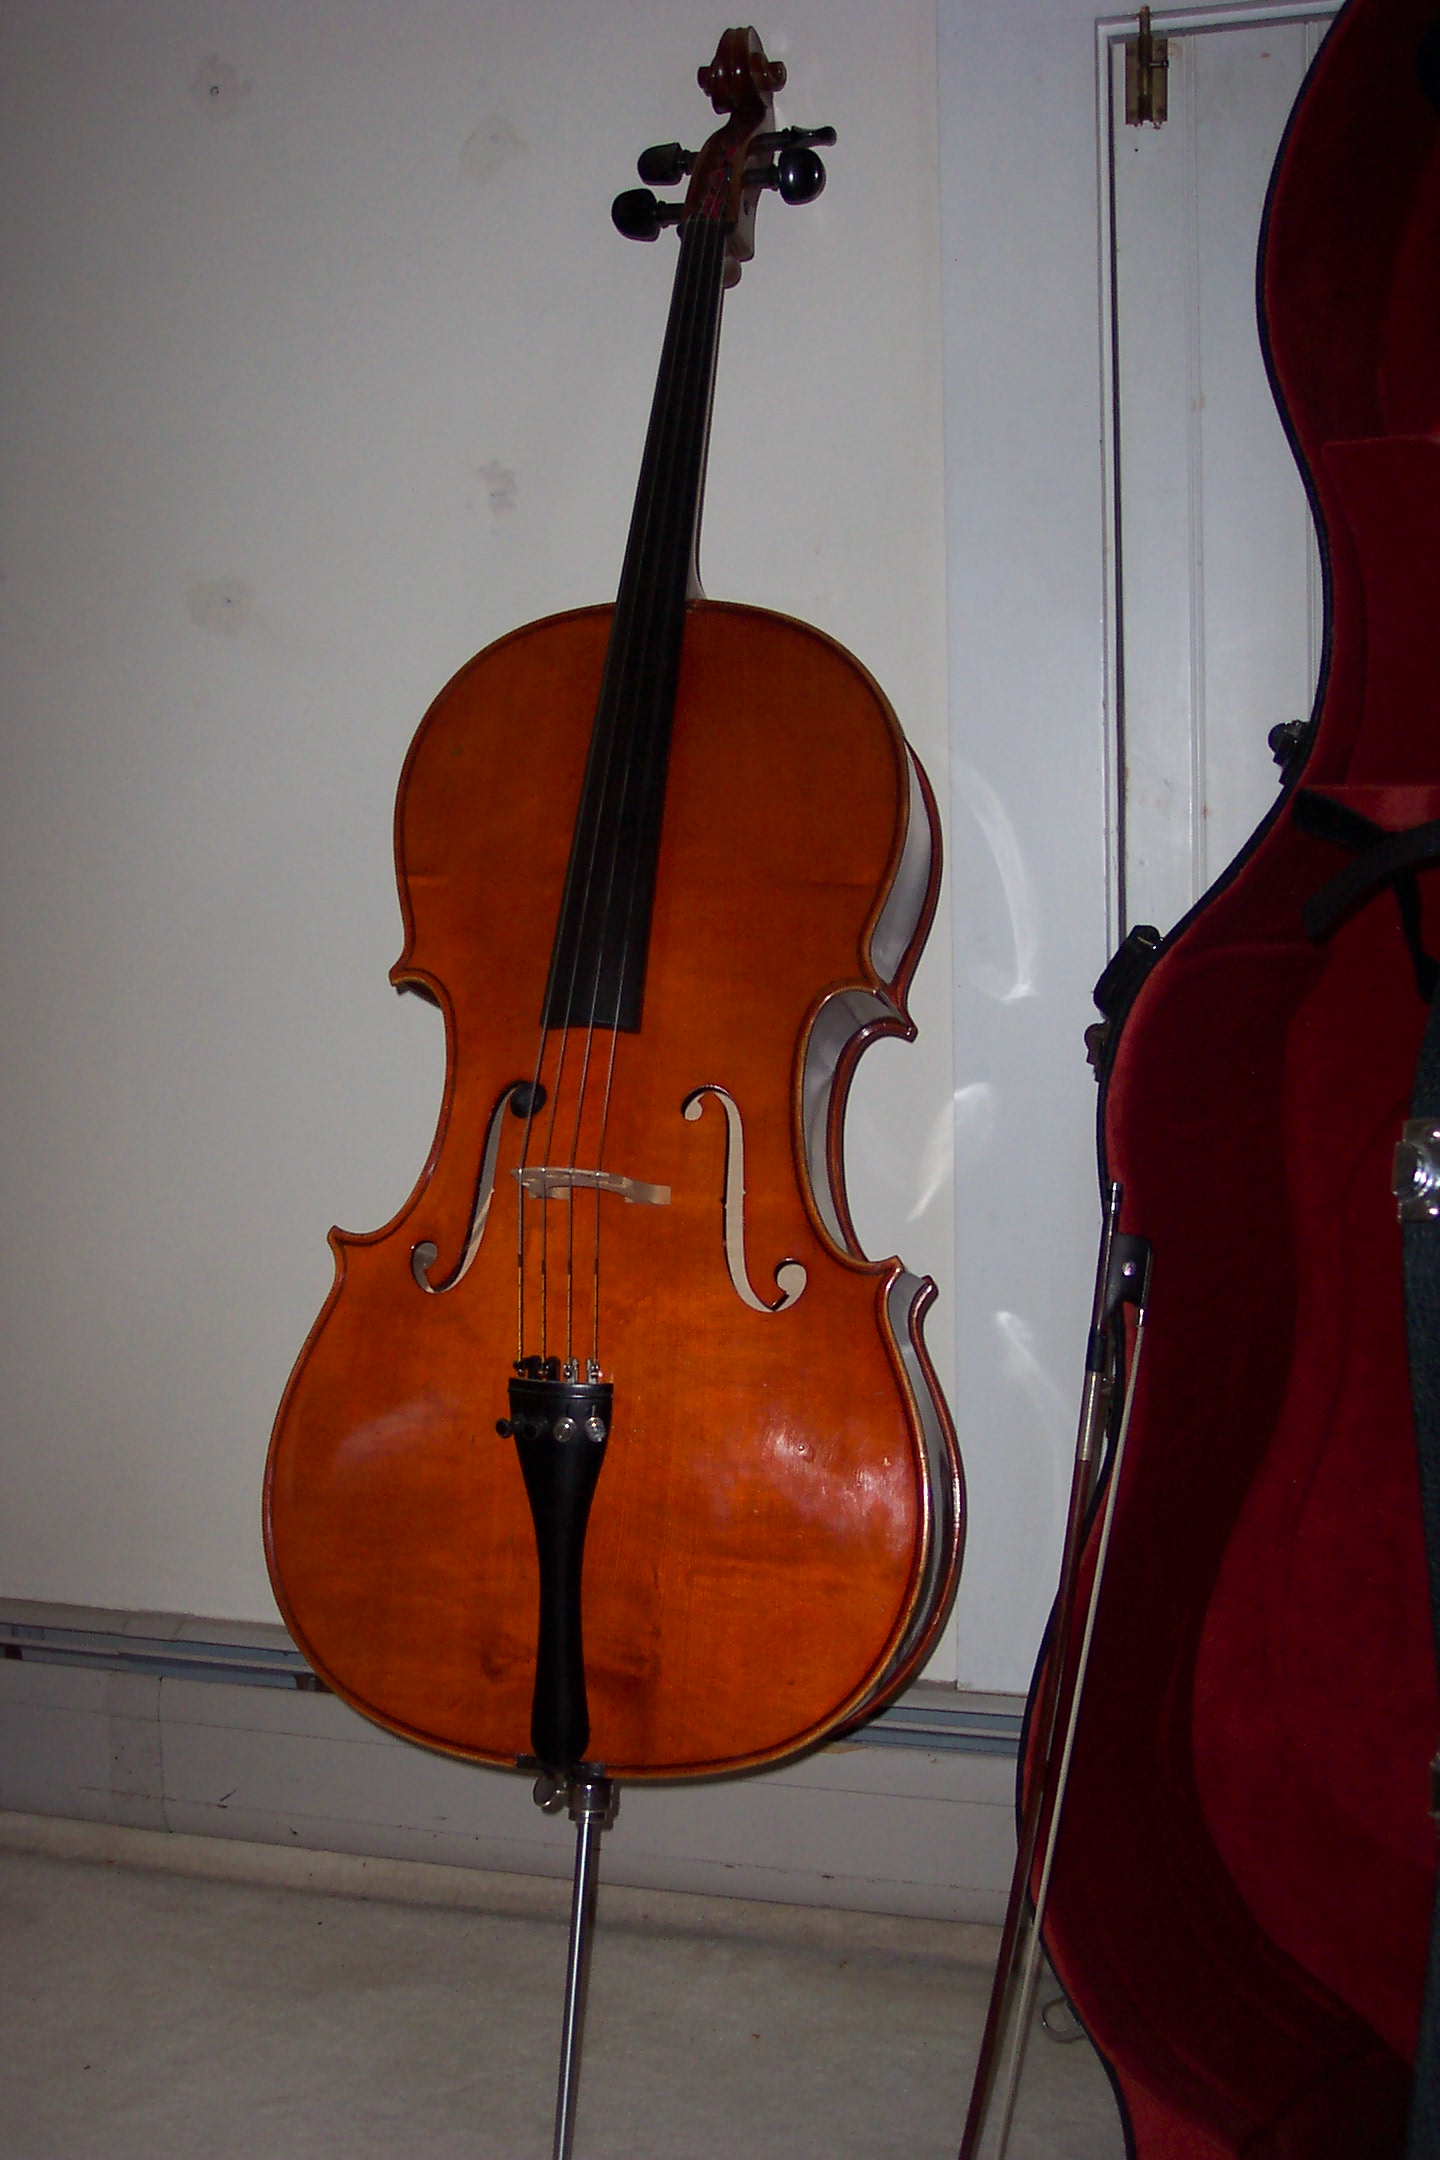 1979 Horst Grunert Full size Cello - excellent condition